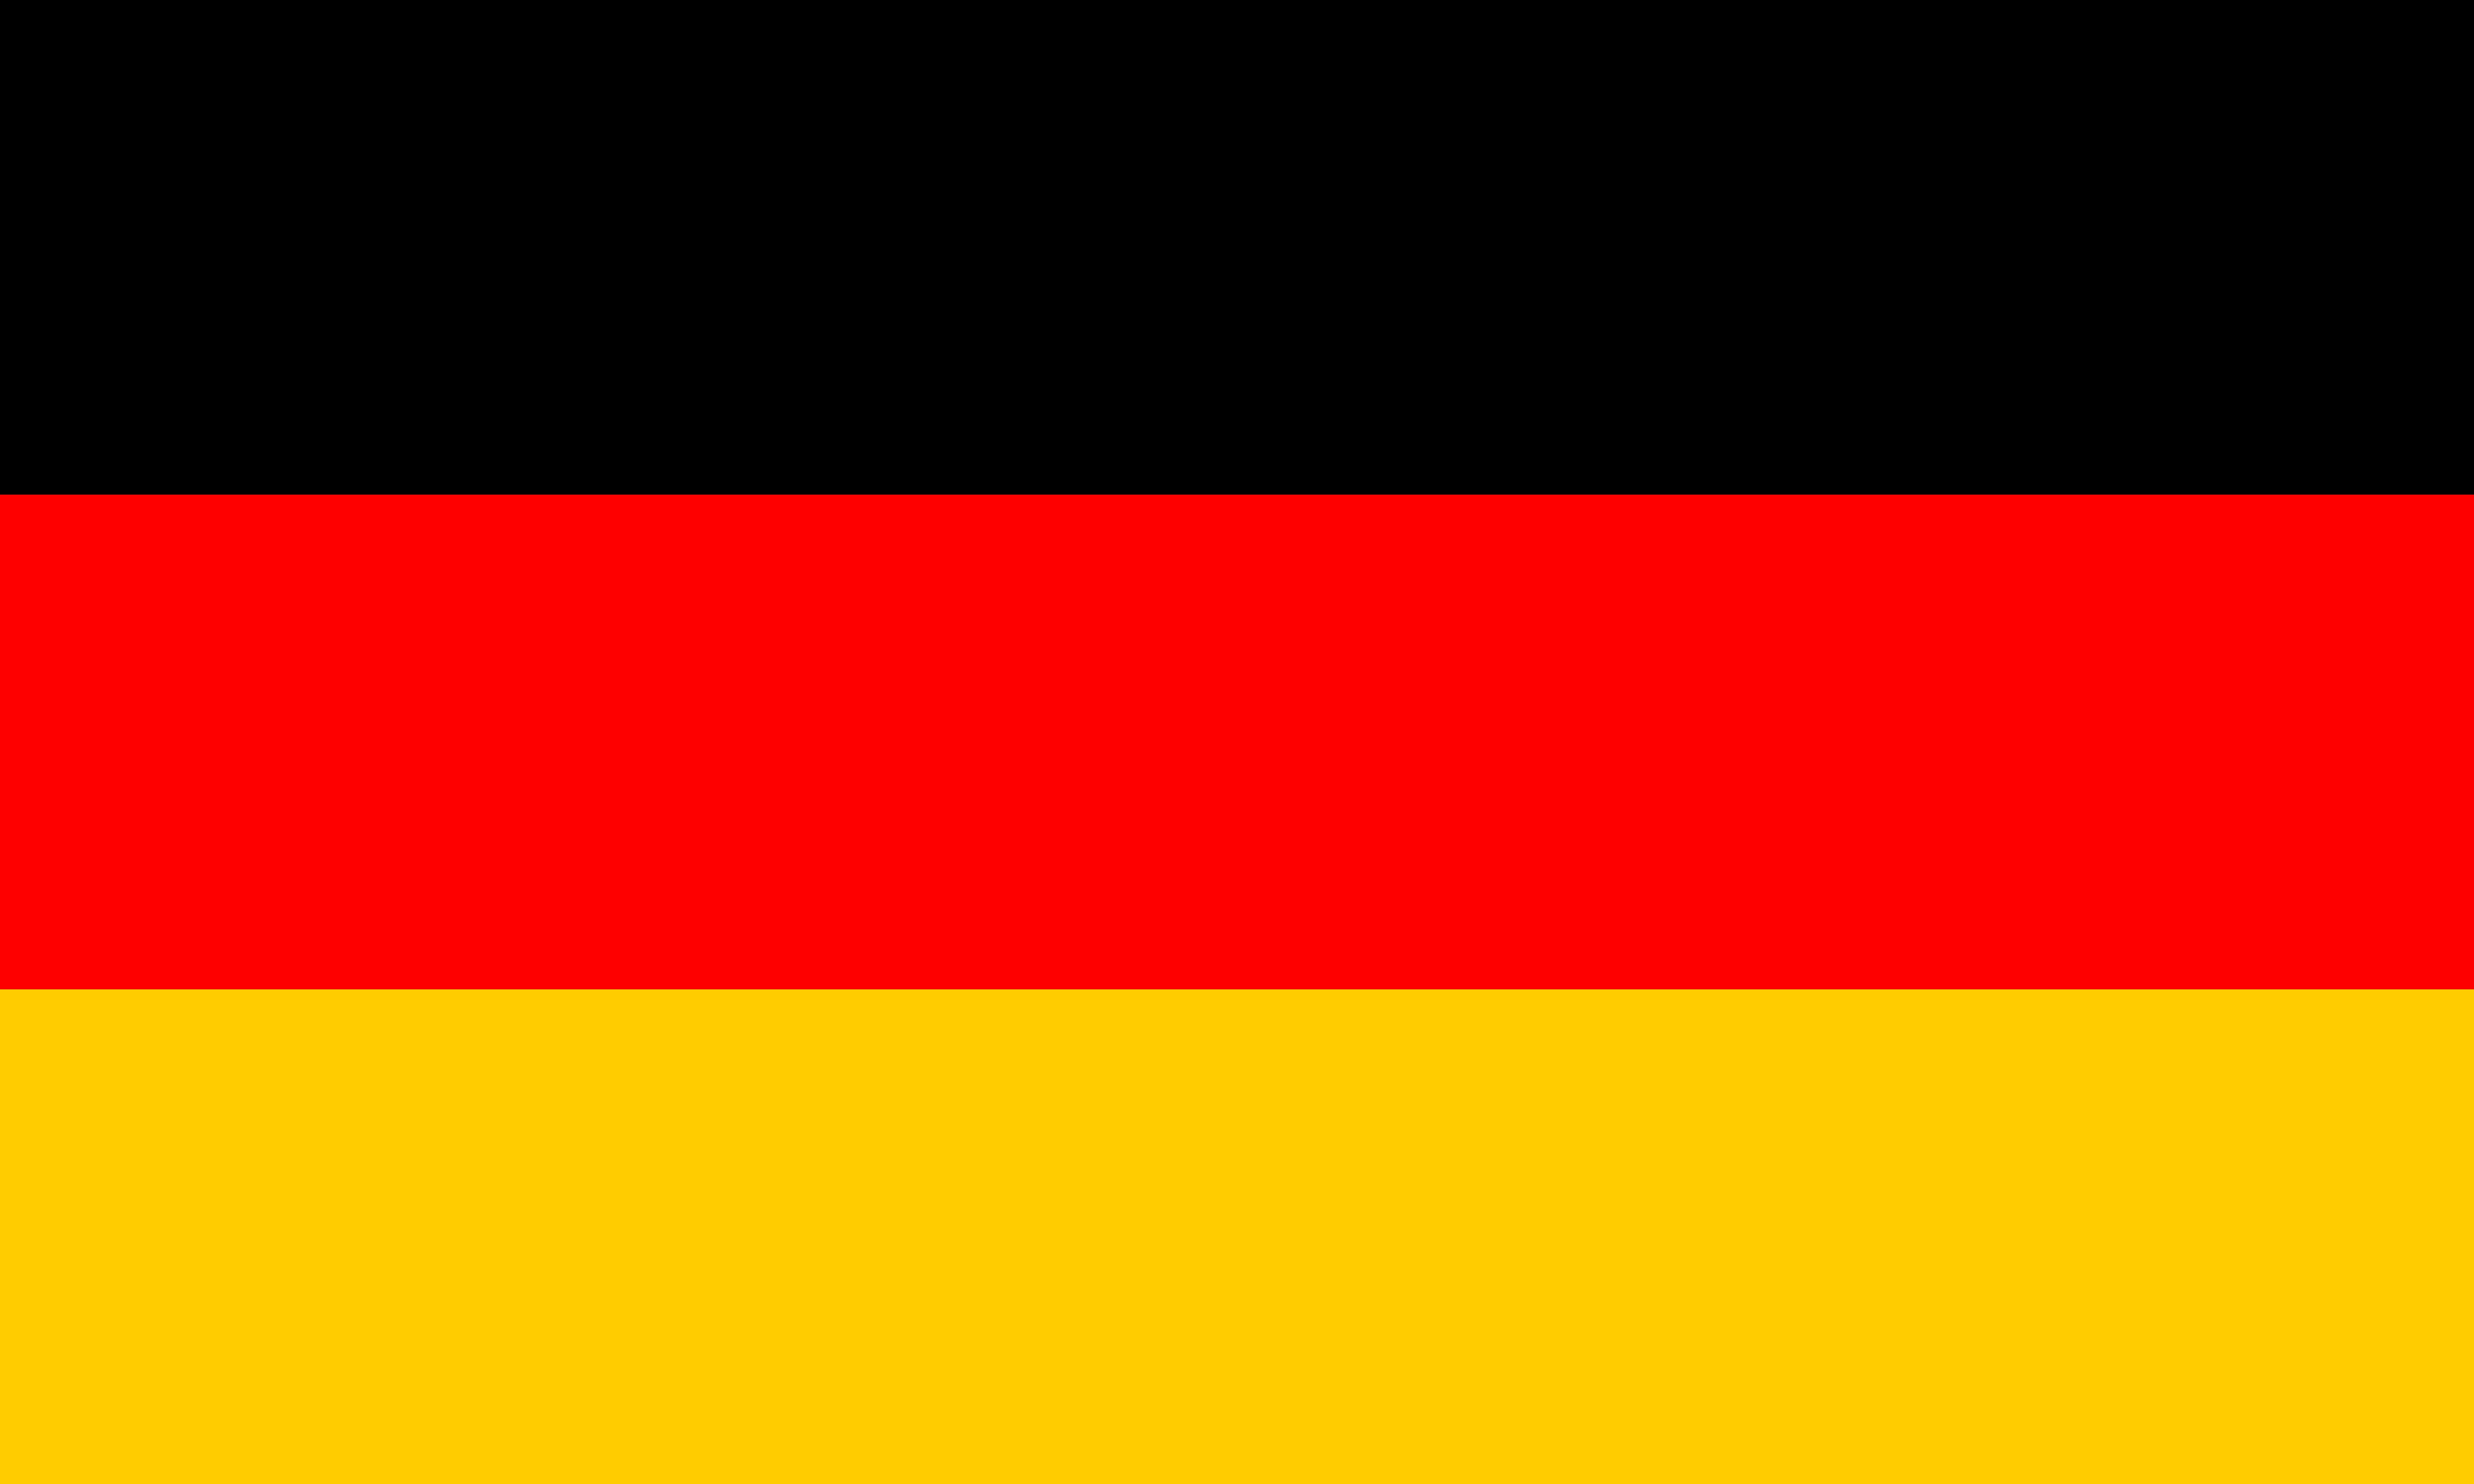 Germany flag.jpg